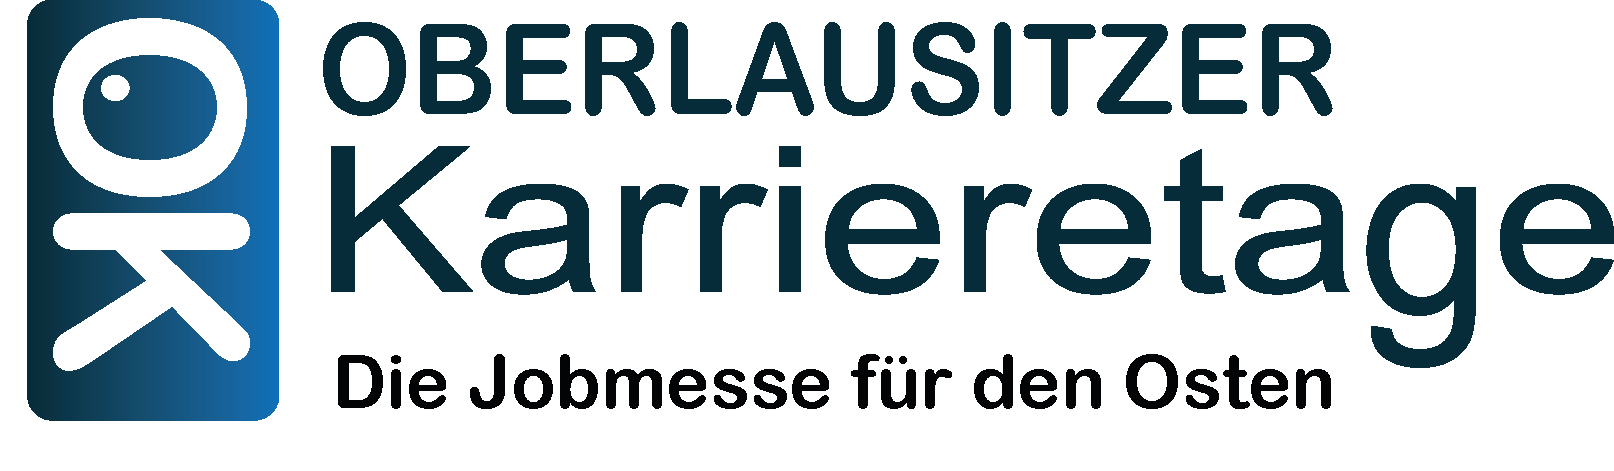 (c) Oberlausitzer-karrieretage.de